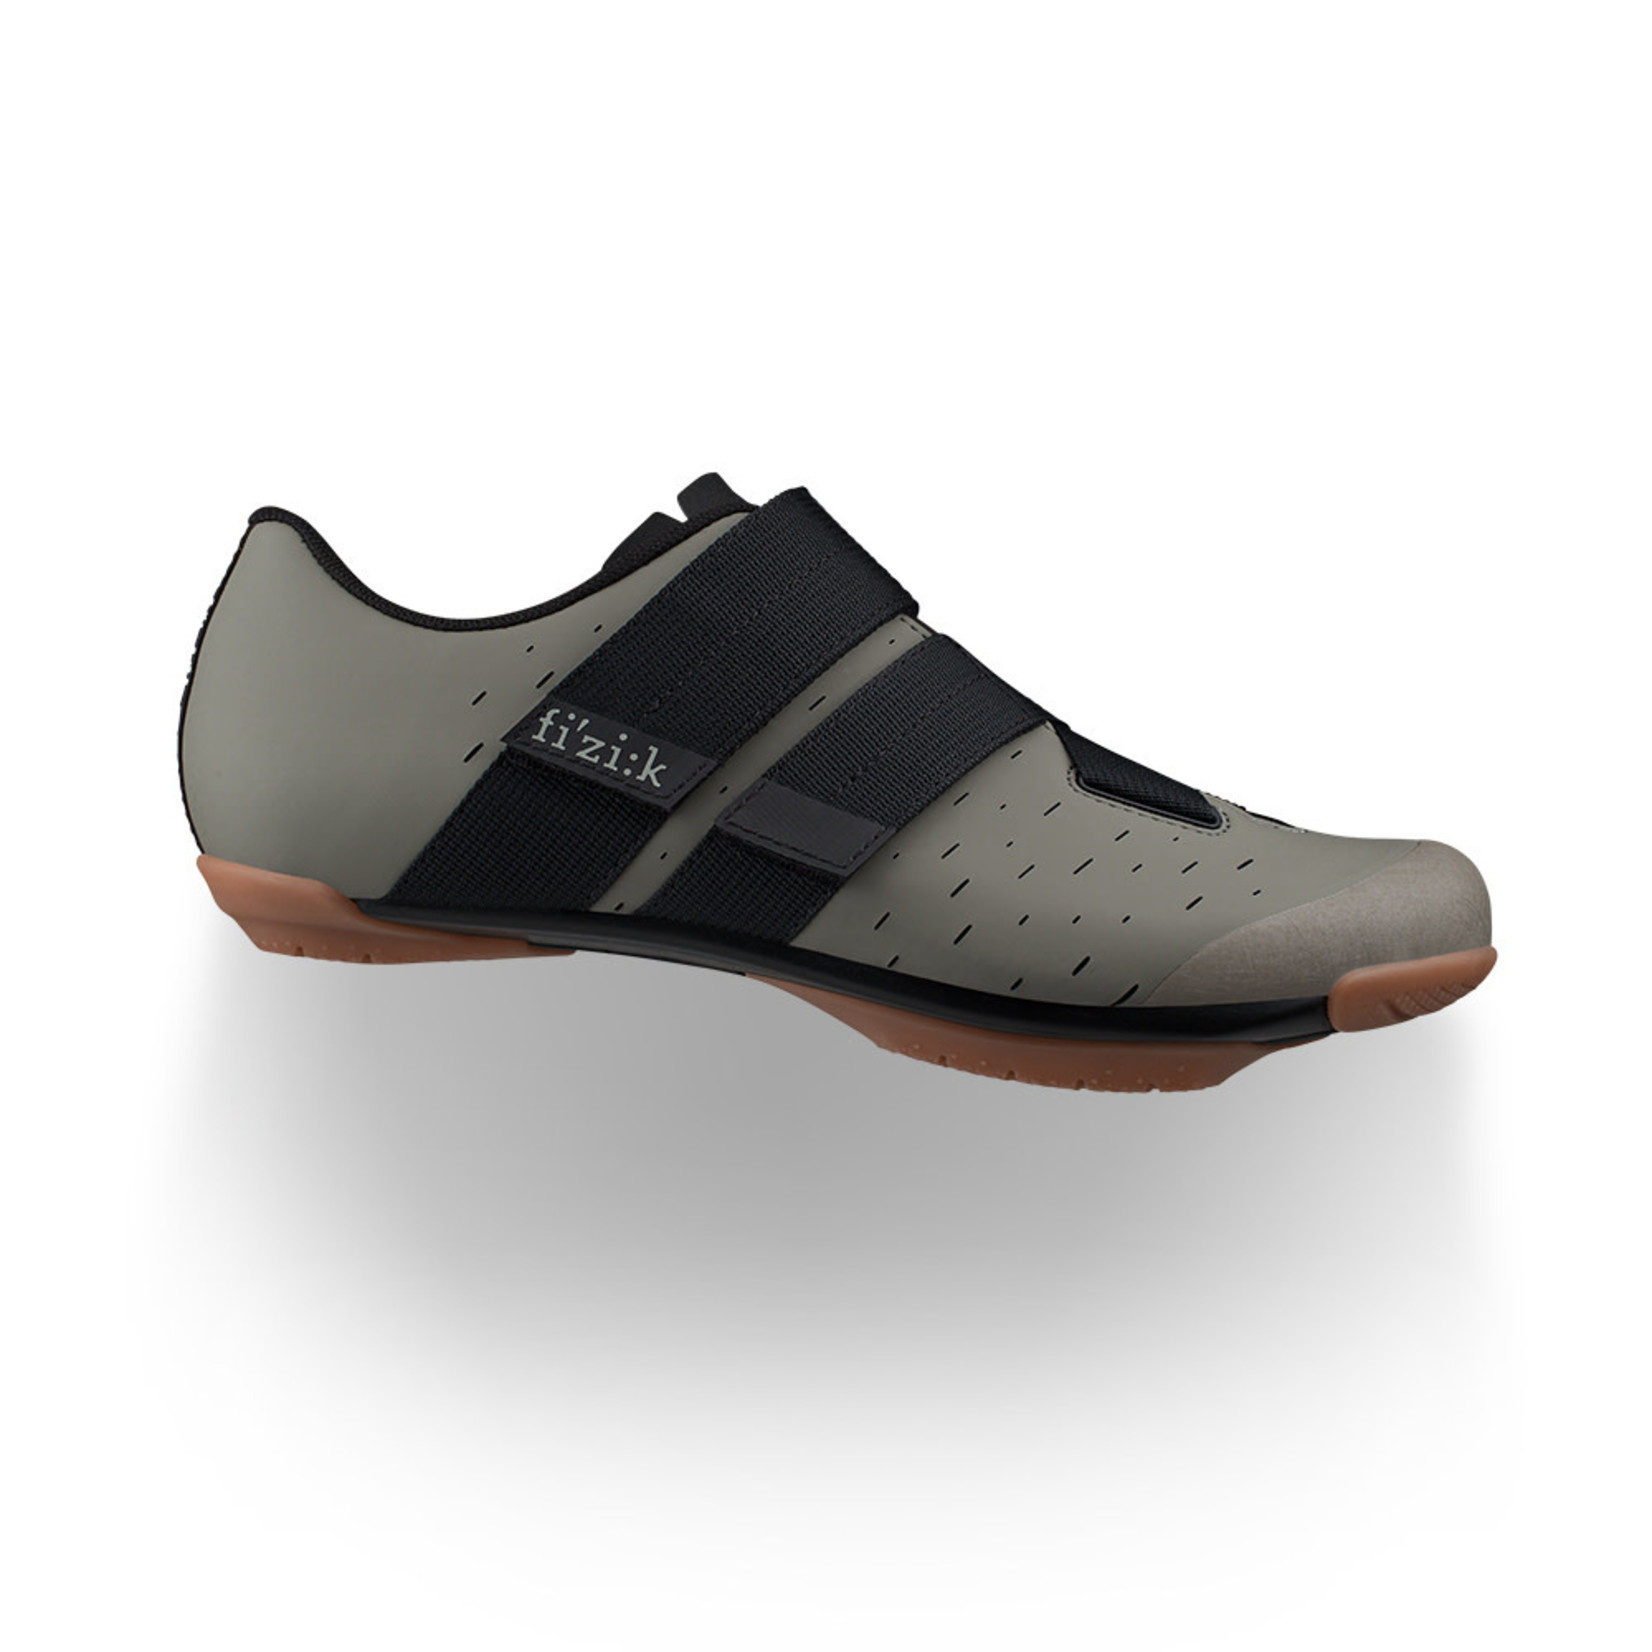 Fizik Fizik X4 Terra Powerstrap Mountain Shoes - Mud/Caramel X4 Nylon Outsole